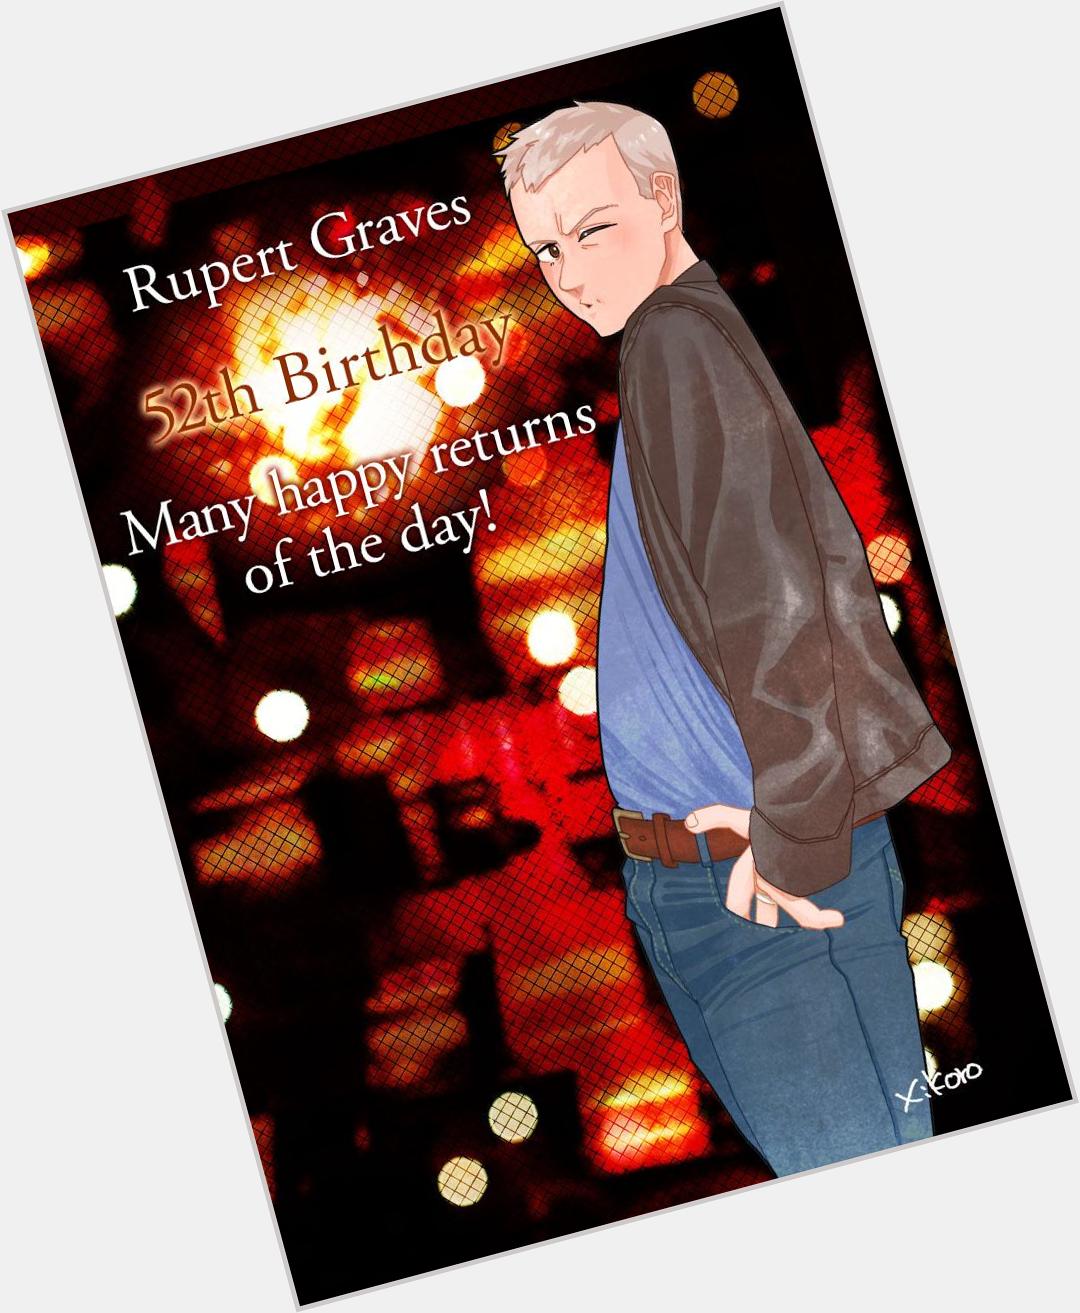 Happy Birthday Rupert Graves!
52                               